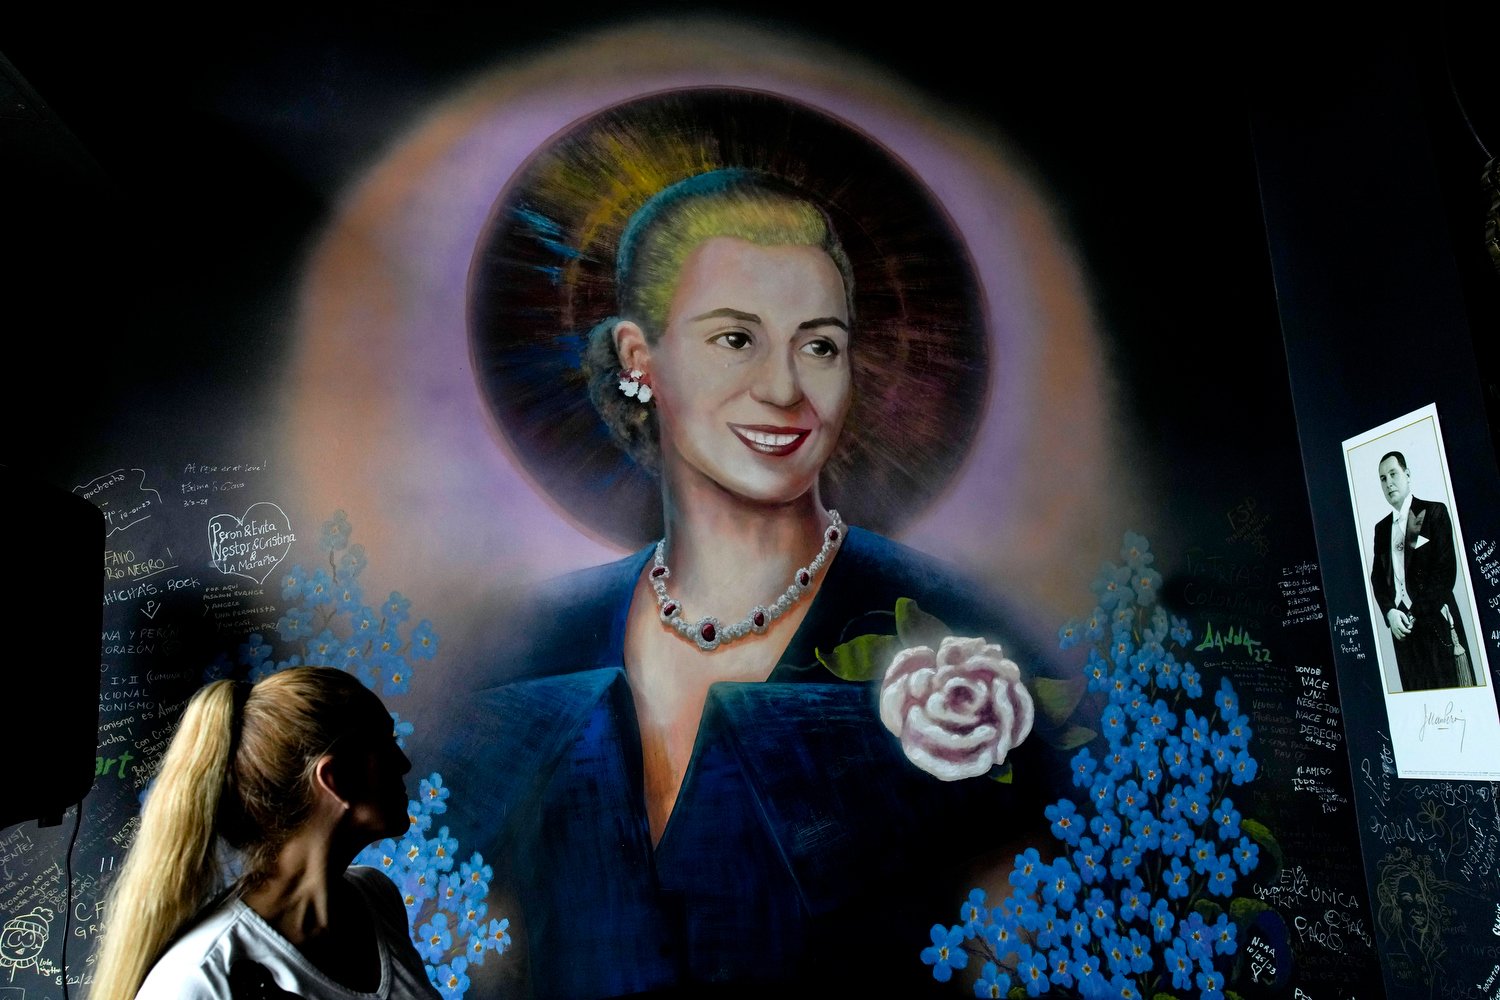  A mural of Argentine former first lady María Eva Duarte de Perón, better known as Eva Perón, or Evita, depicting her with a saint's halo, adorns a wall inside the Peron Peron restaurant in the San Telmo neighborhood of Buenos Aires, Argentina, Frida